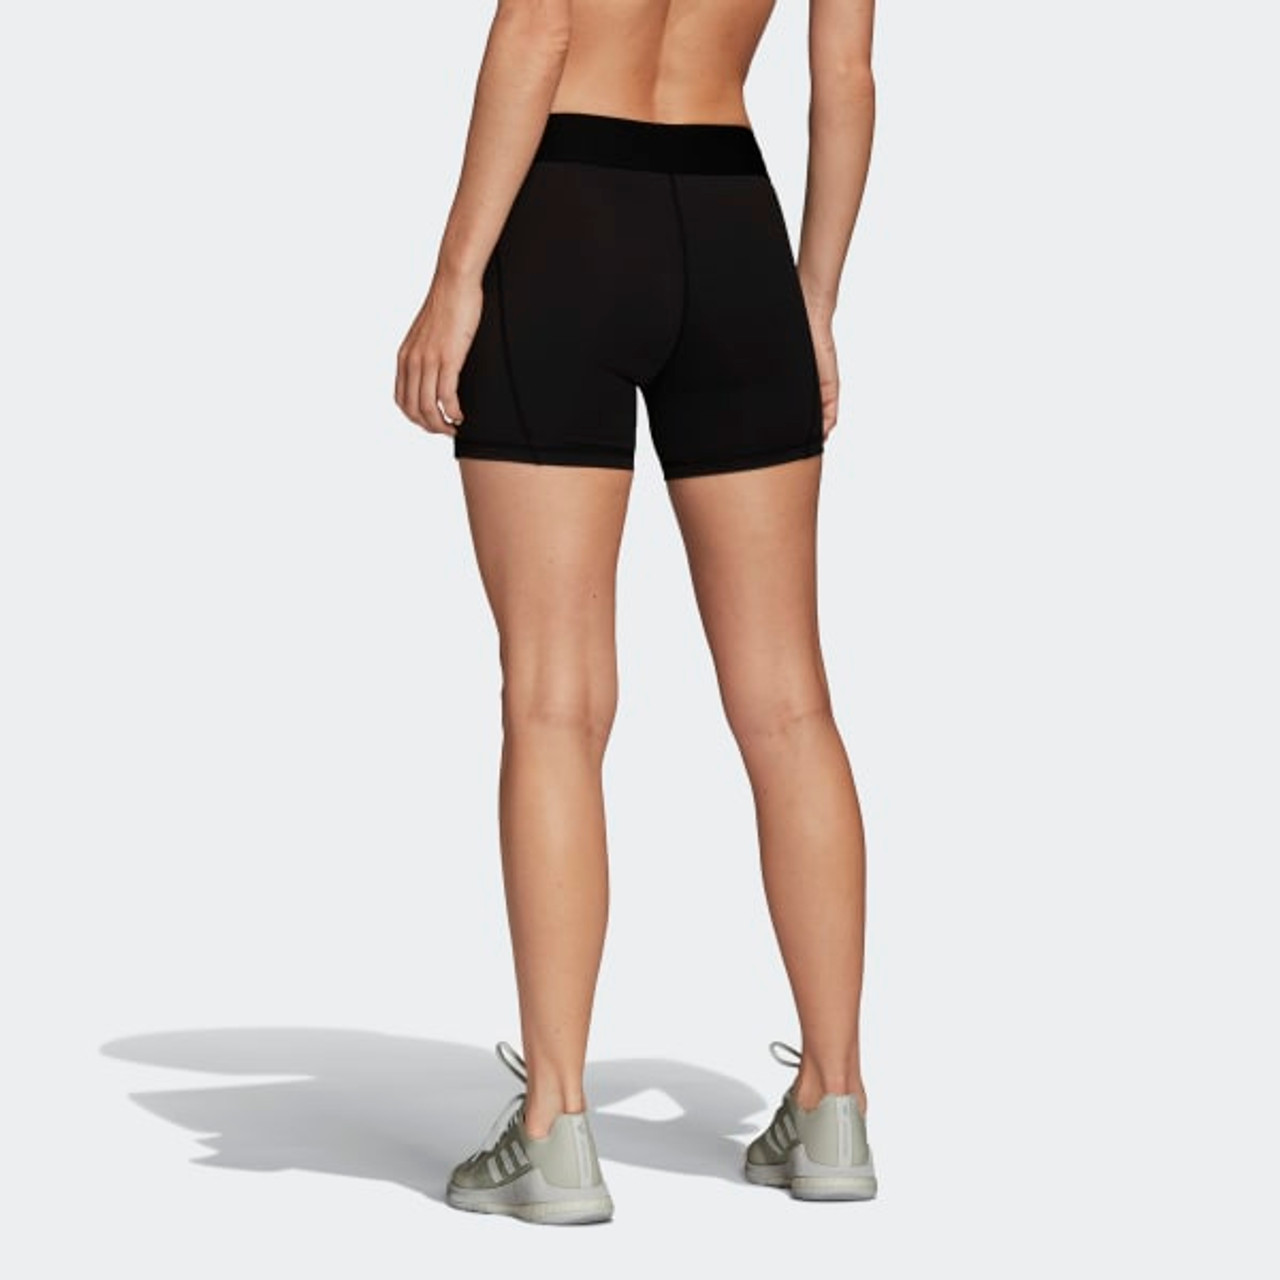 adidas Women's Techfit Volleyball Shorts, Black/White, X-Large